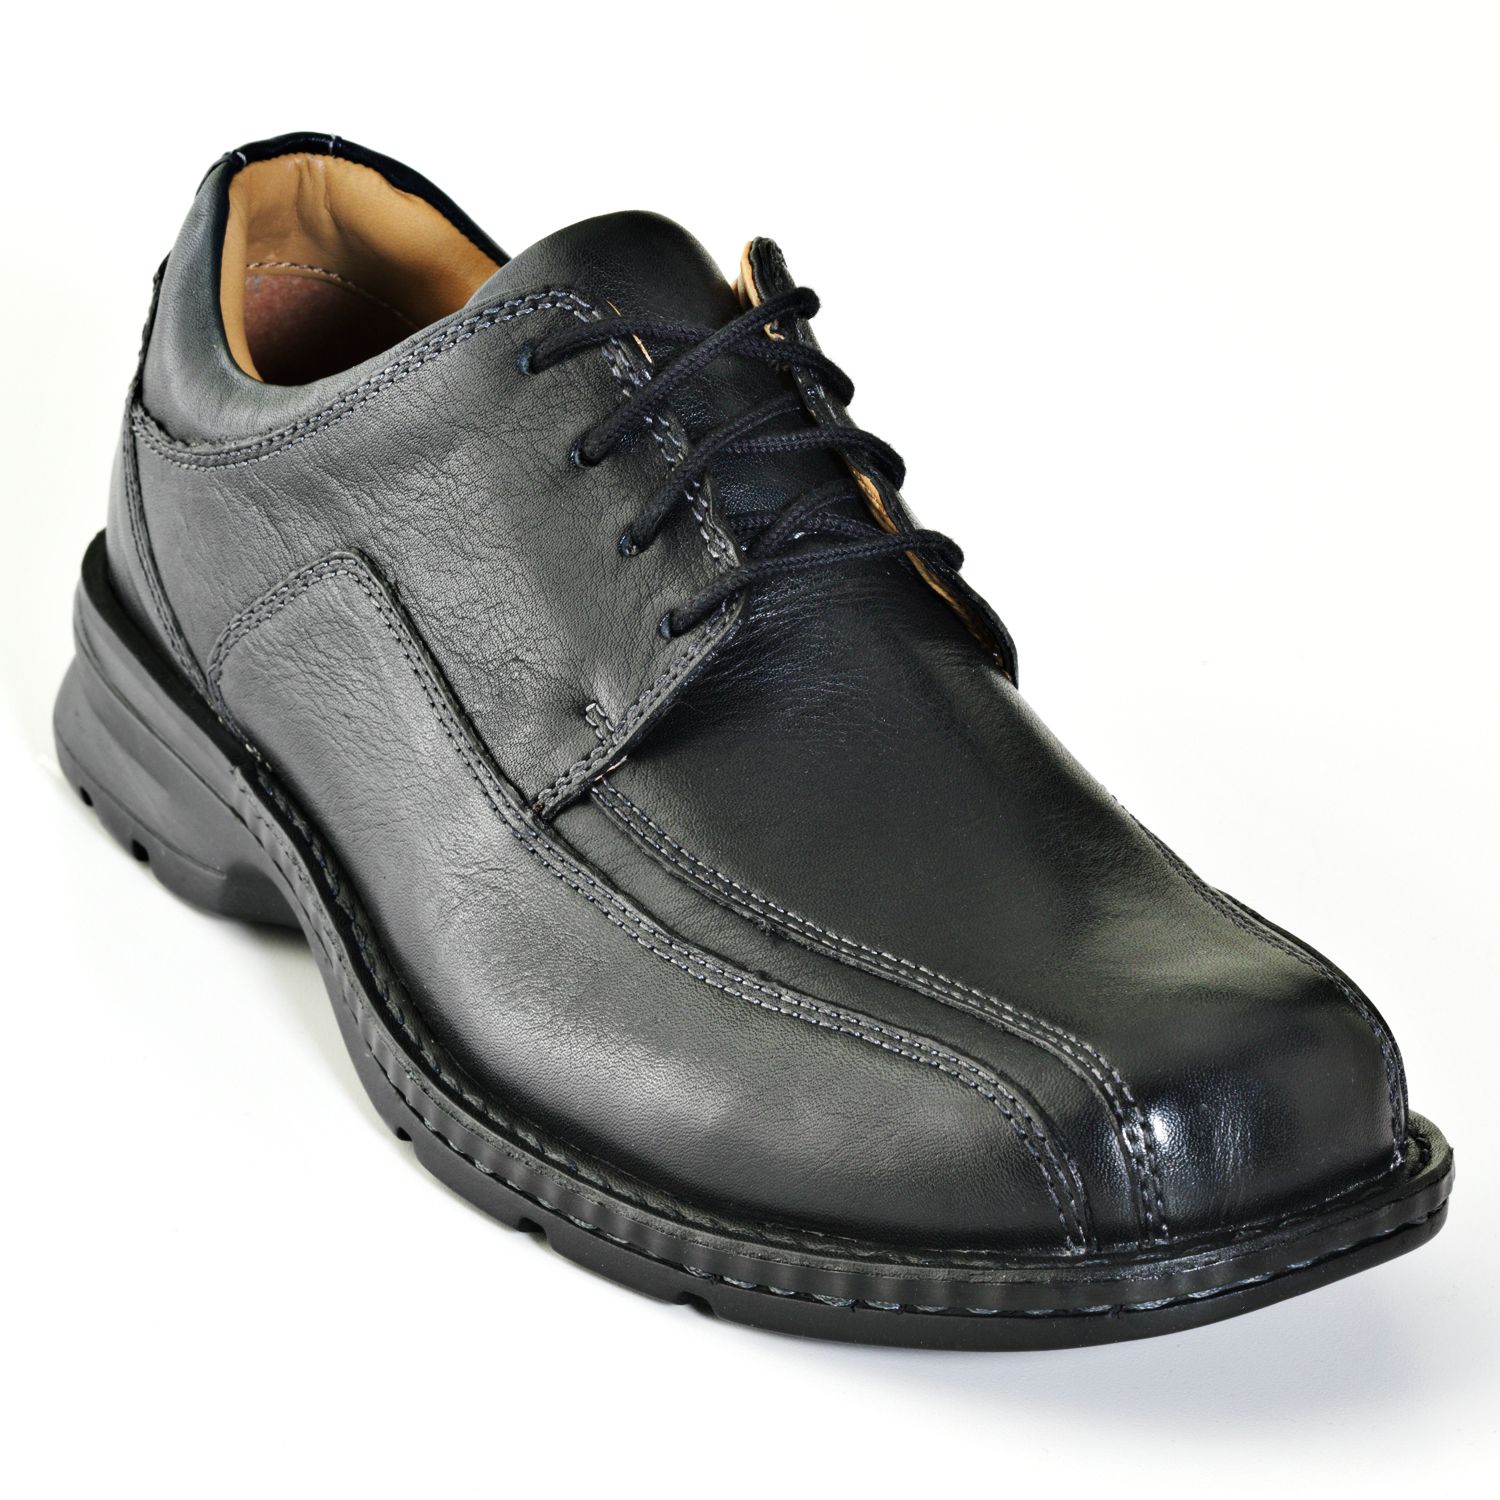 Trustee Leather Oxford Dress Shoe Oxfords